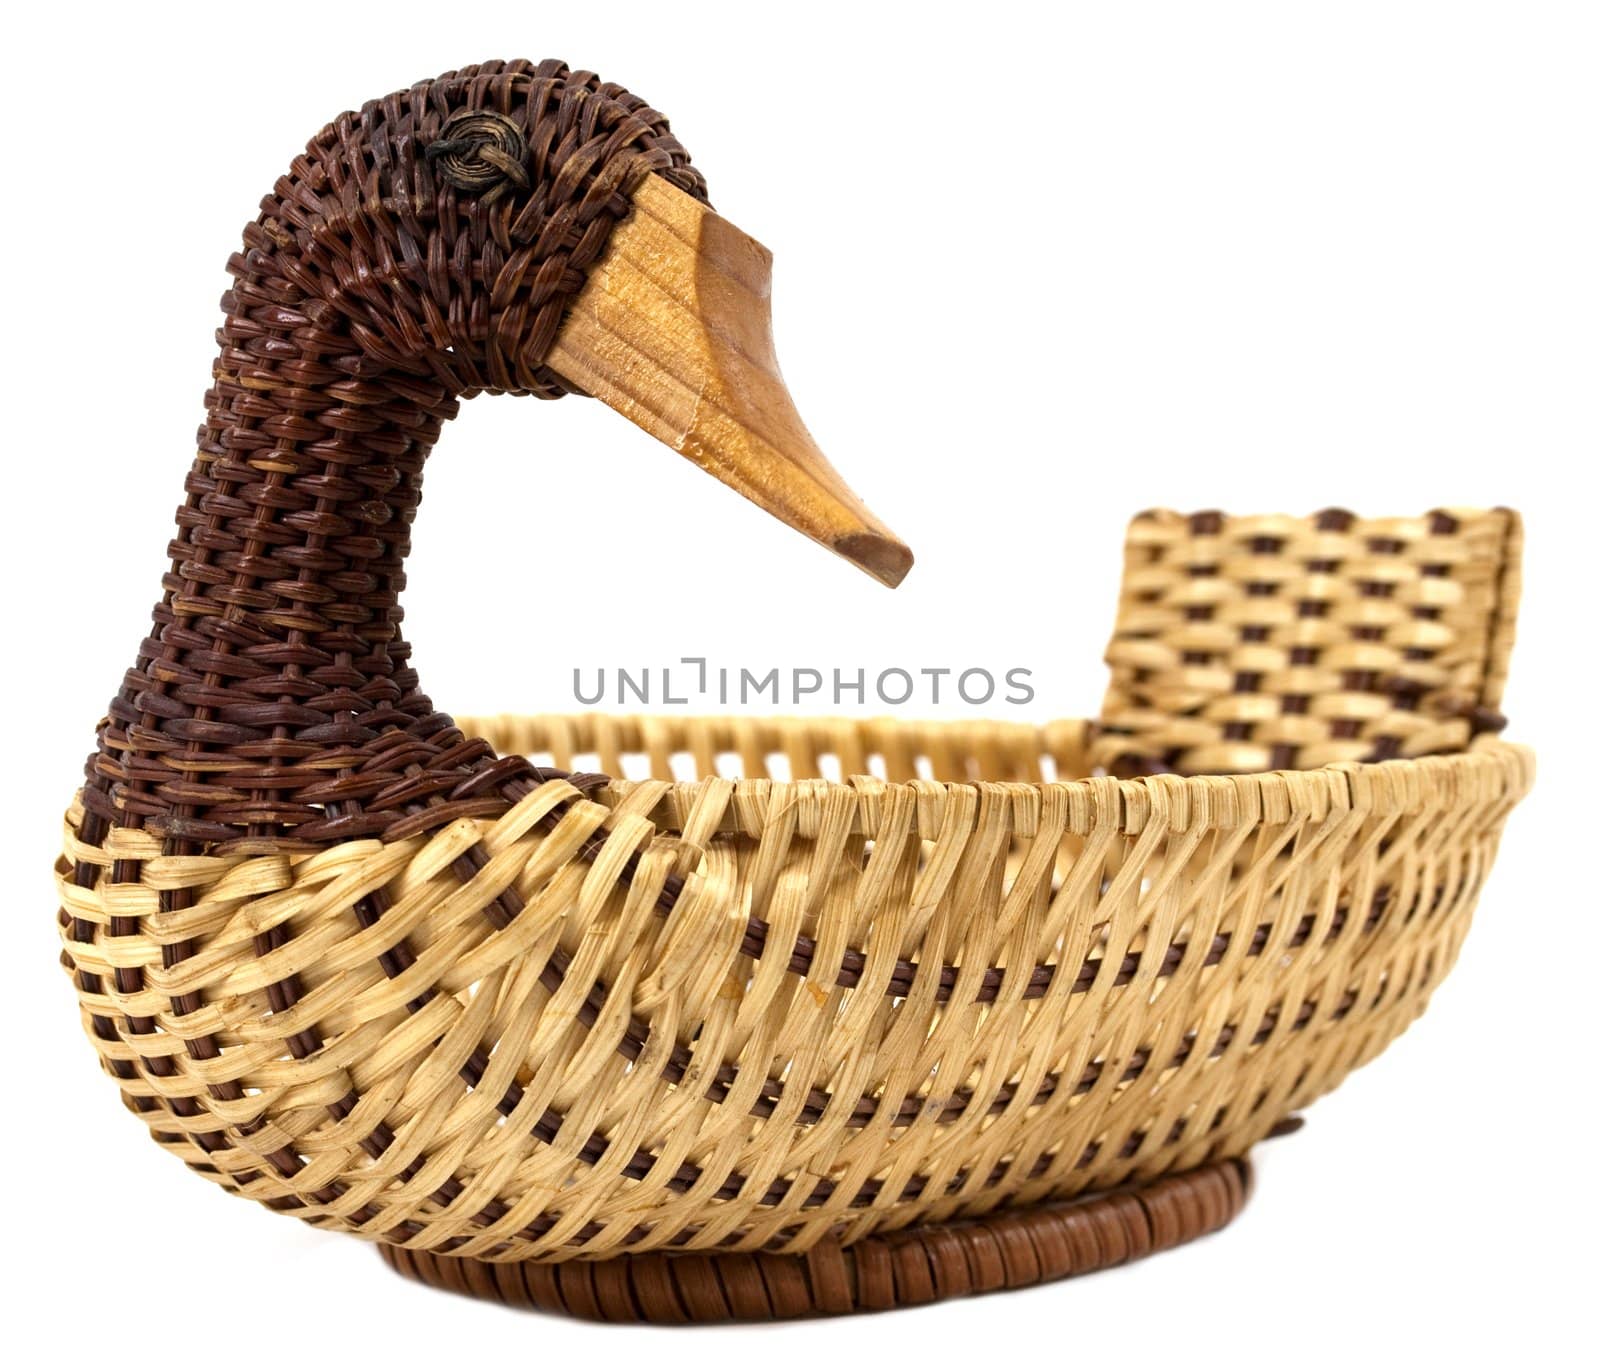 Vintage retro empty duck basket isolated on white background